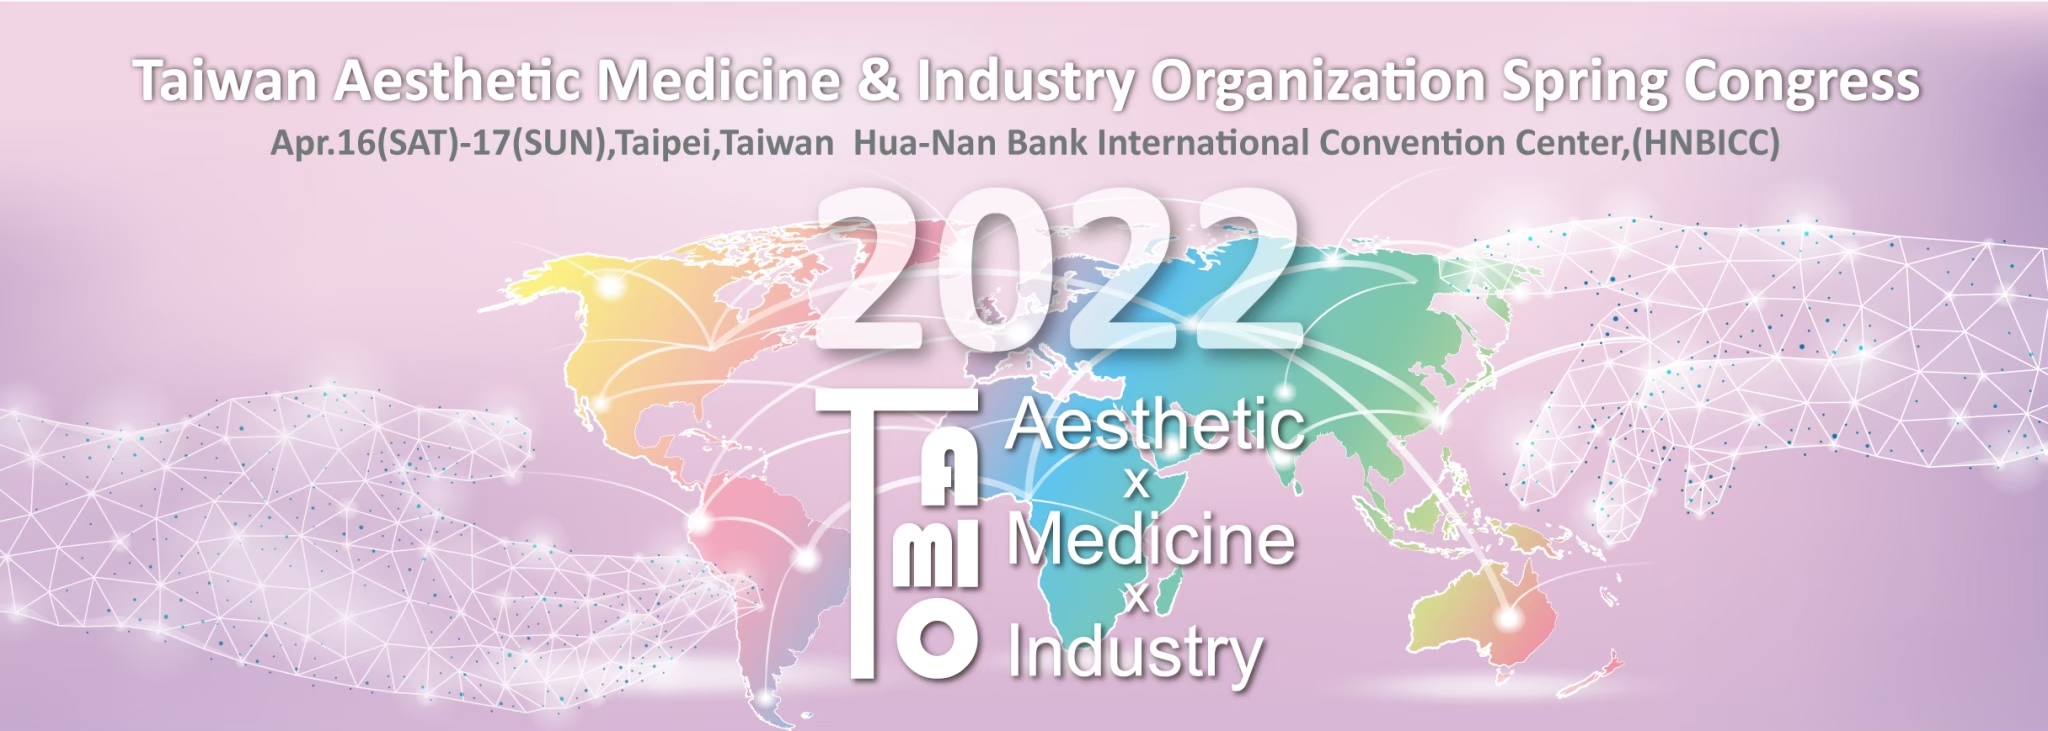 Taiwan Aesthetic Medicine & Industry Organization Spring Congress